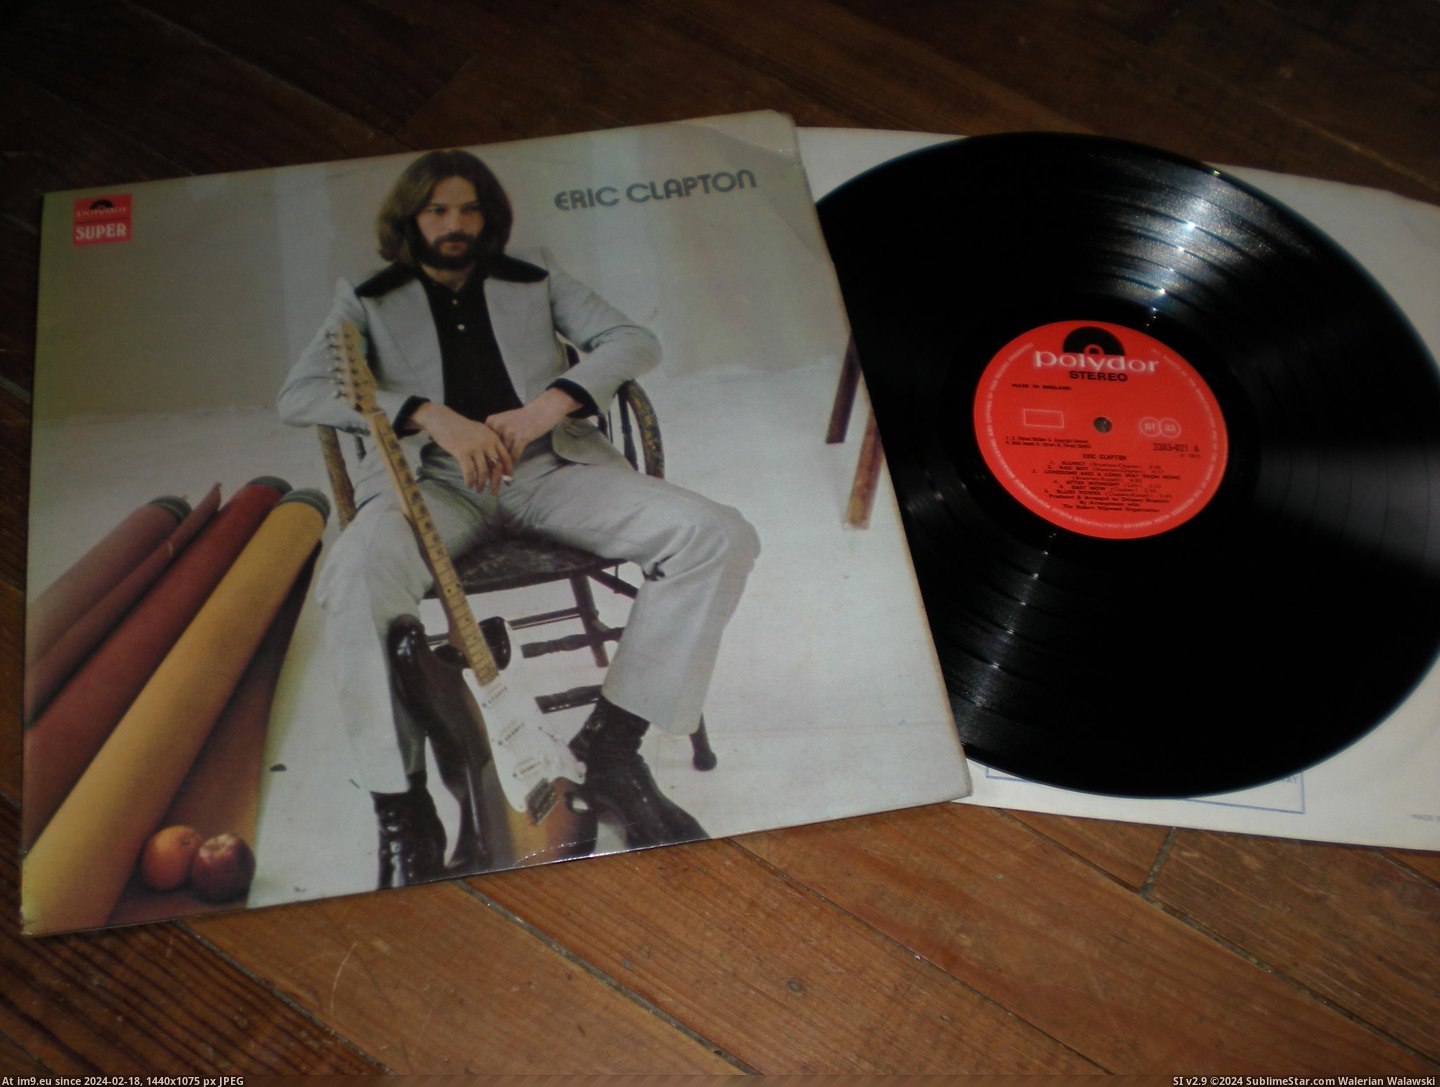 #Clapton  #Eric Eric Clapton lp 2 Pic. (Изображение из альбом new 1))